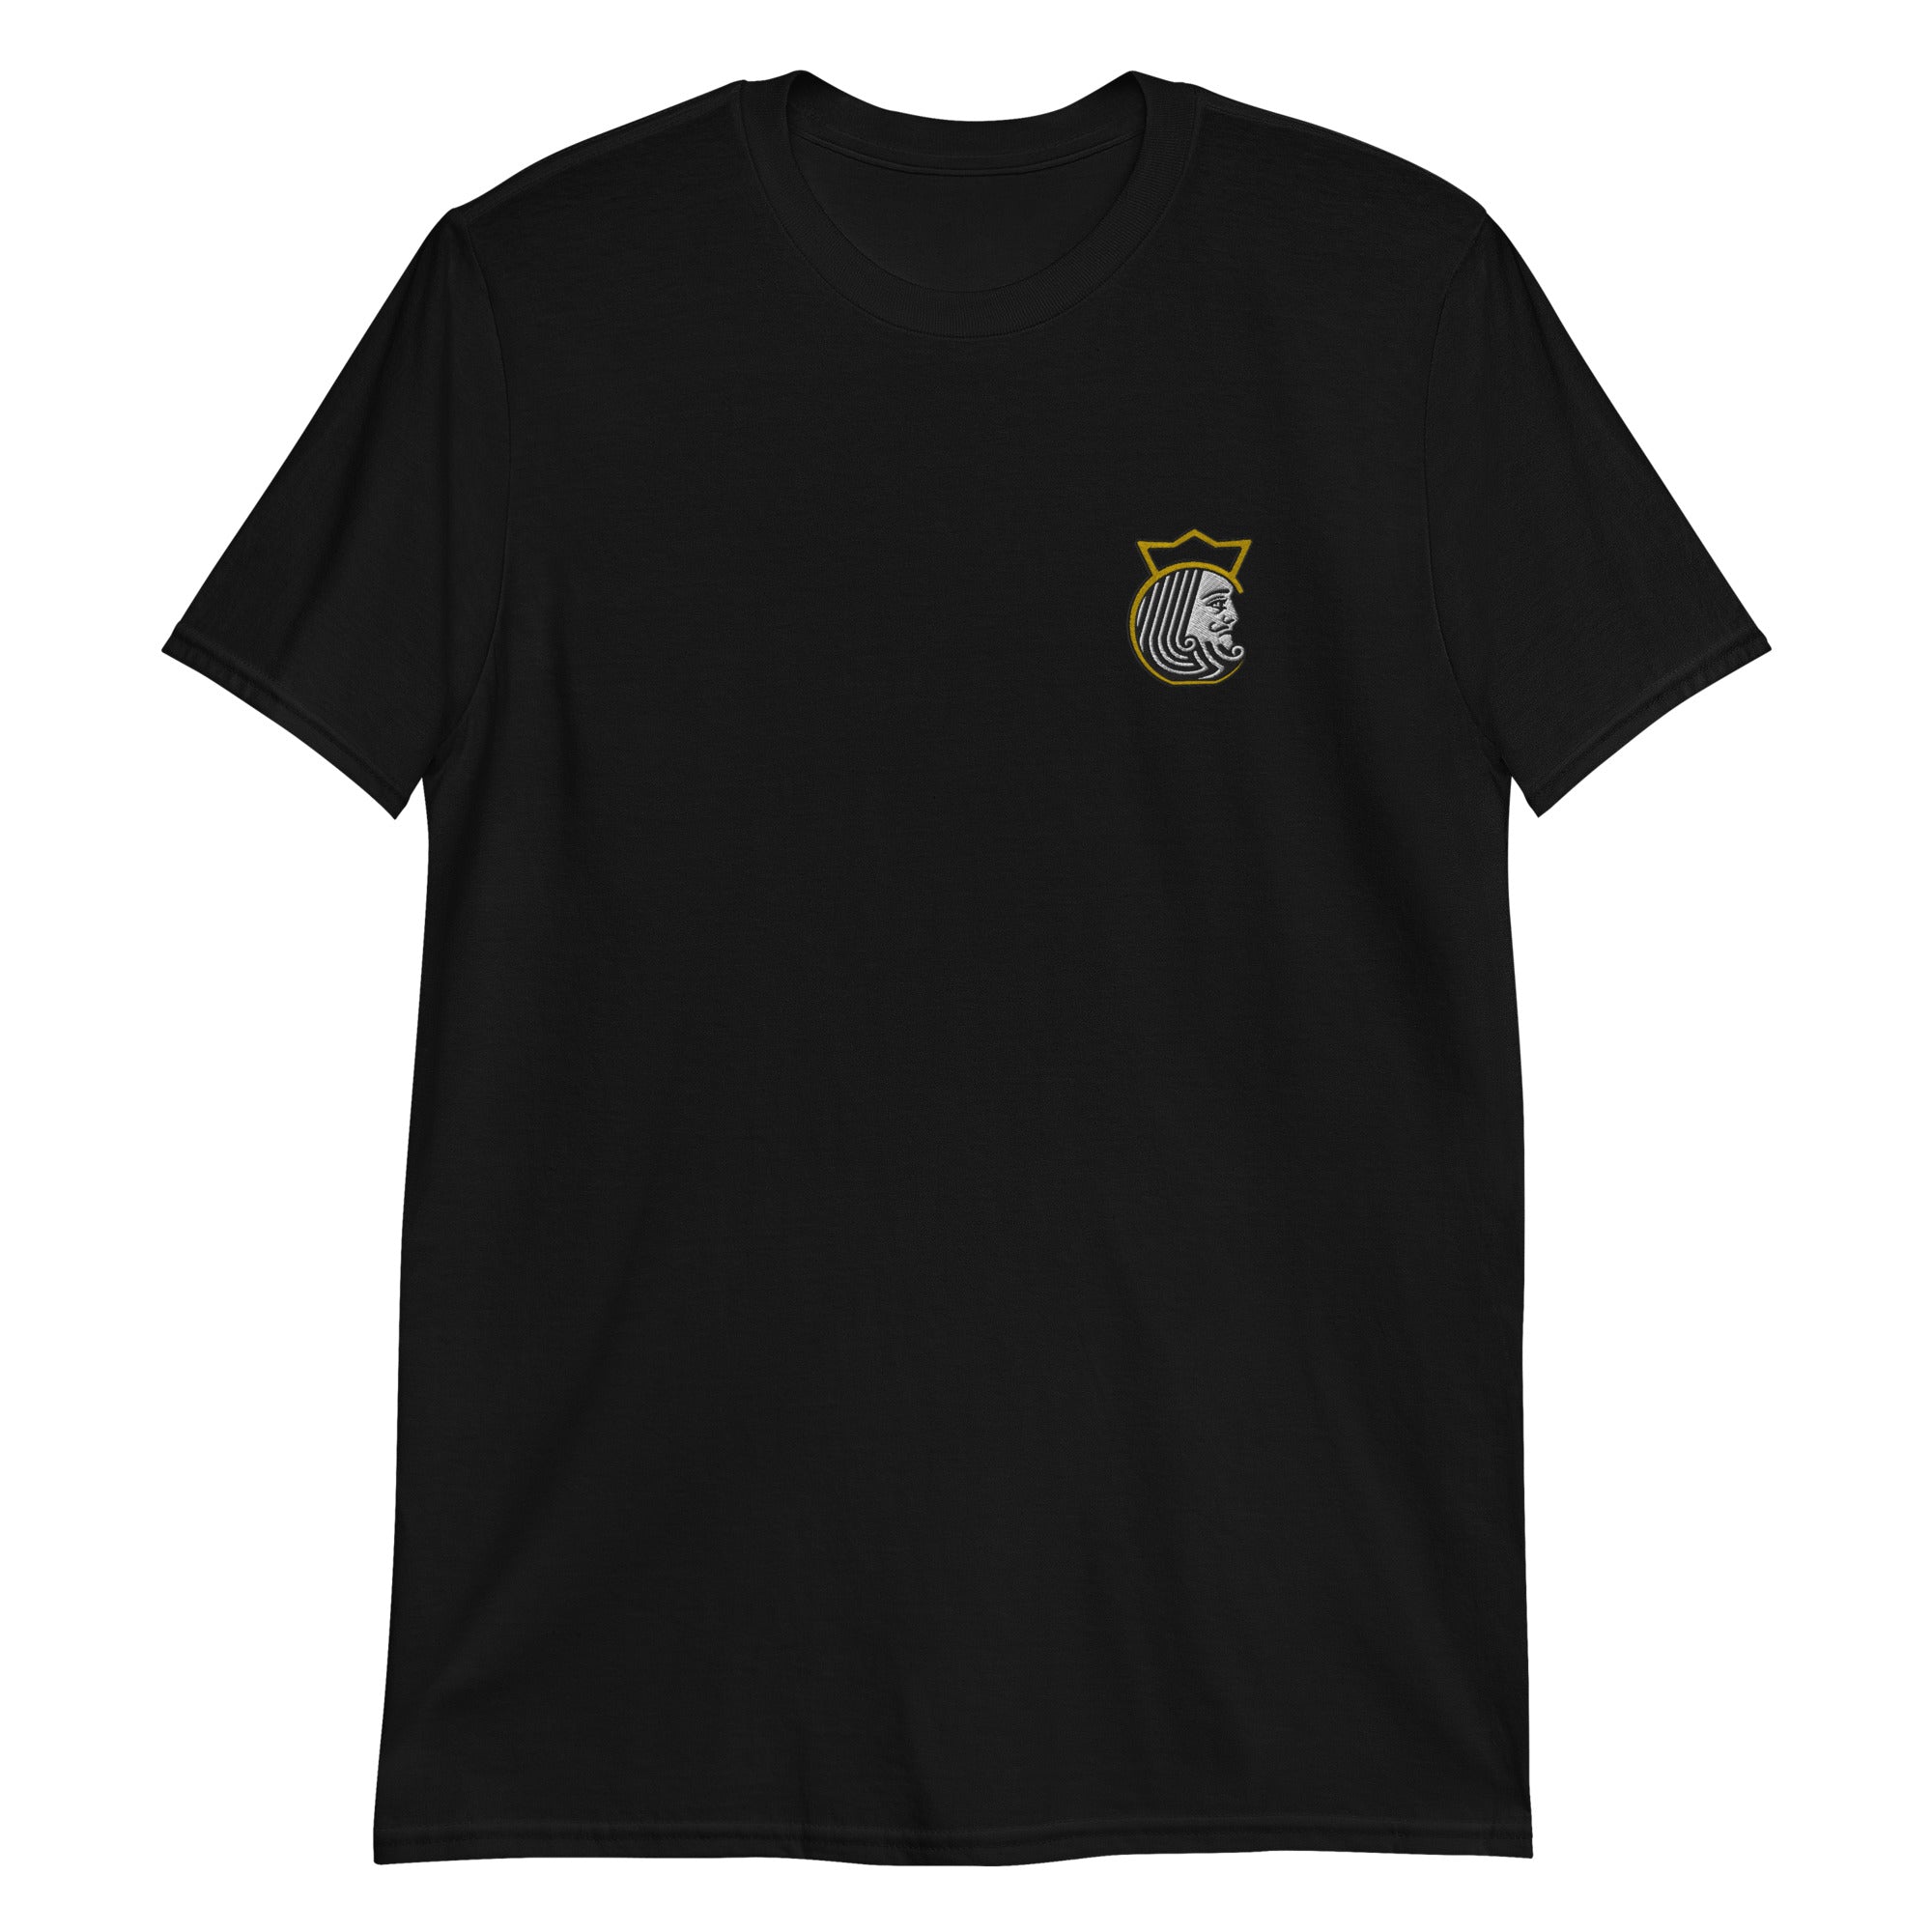 Shop Kettlebell Shirts and Caps for Men & Women